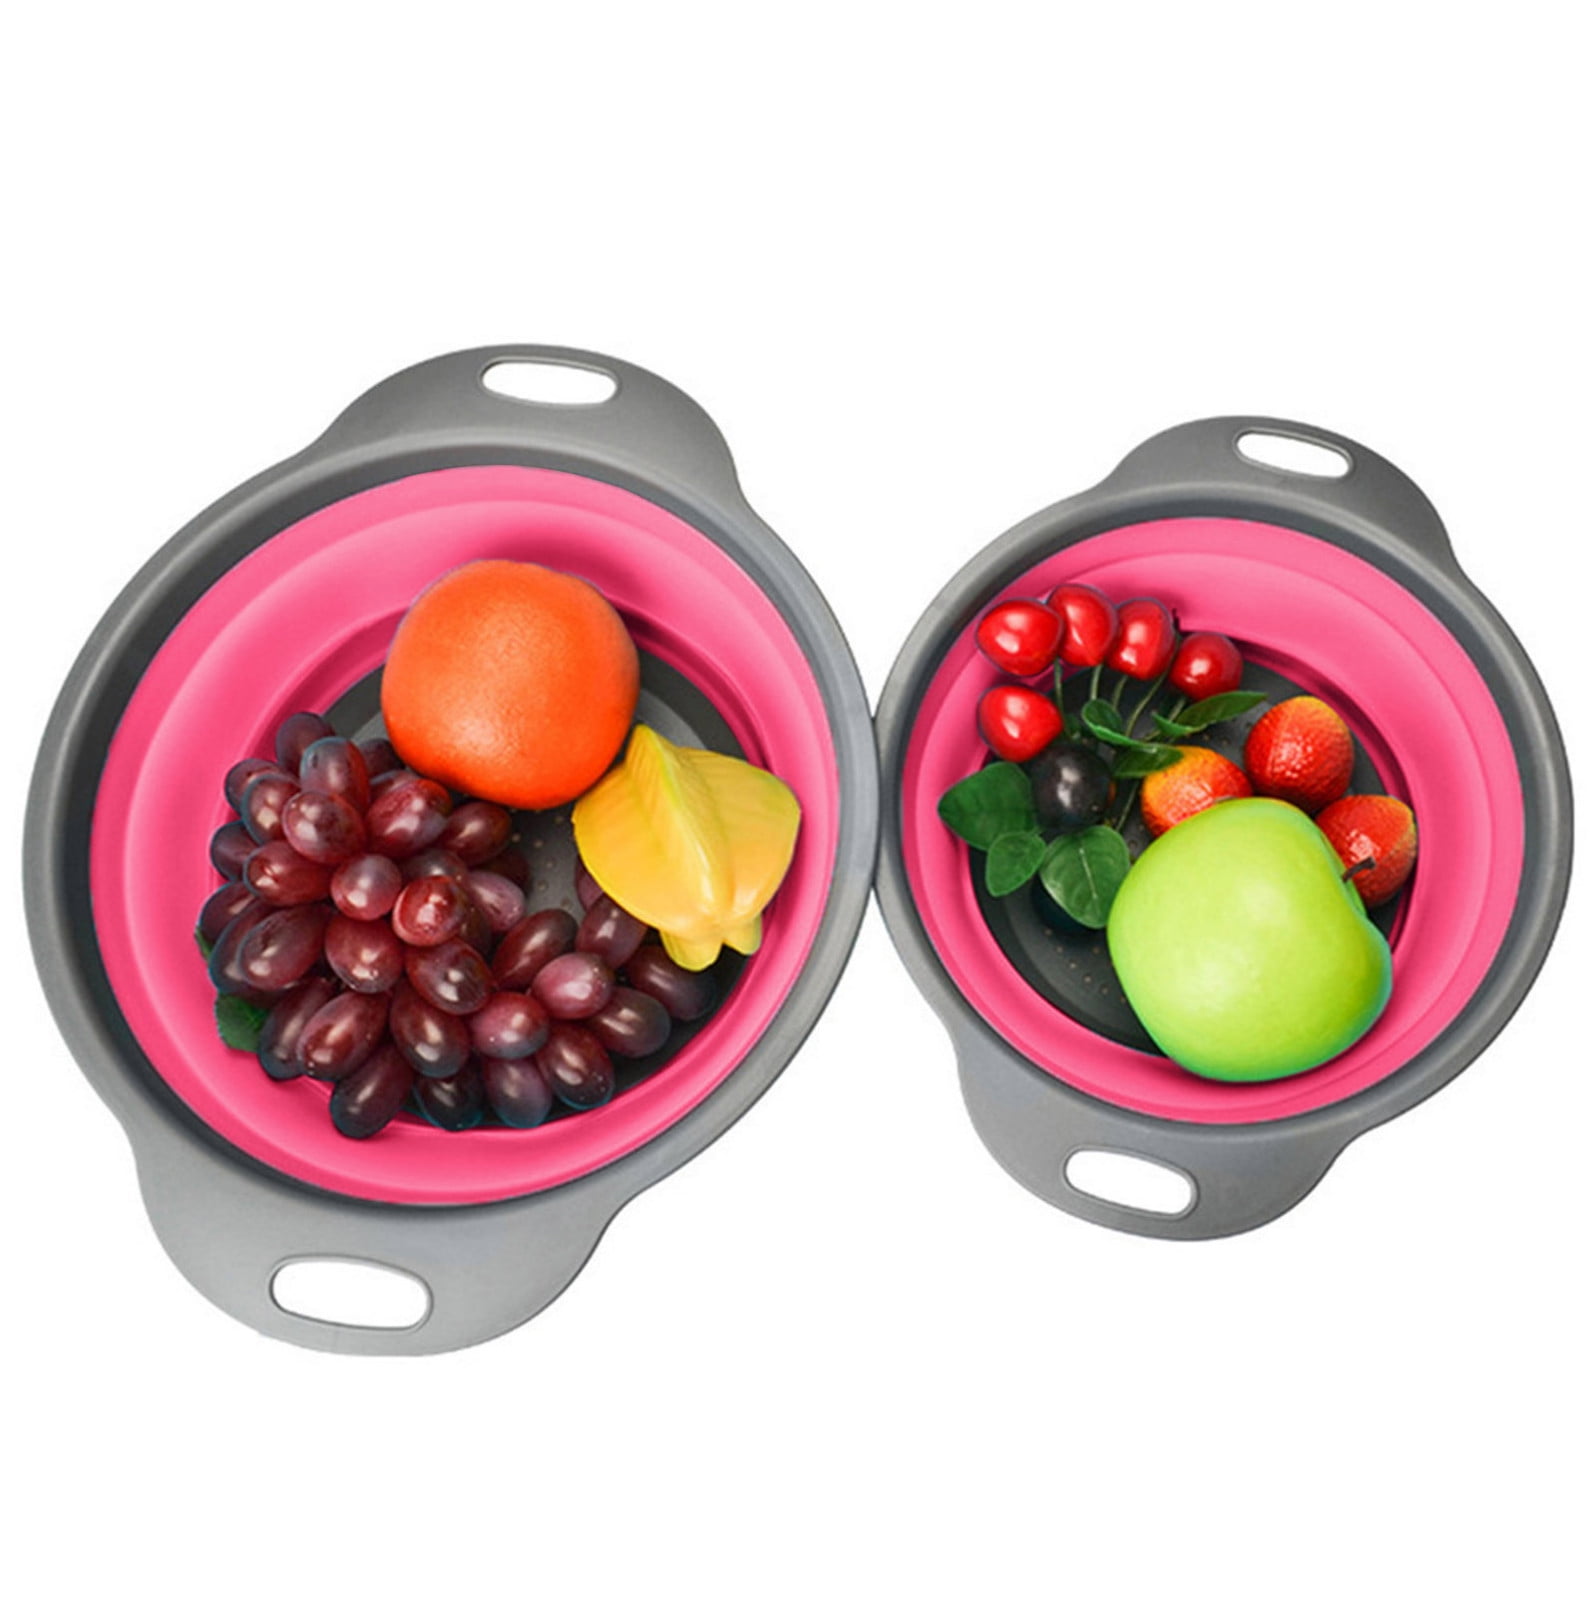 Details about   Dining Fruit Vegetable Silicone Strainer Drain Basket Colander Sink Drain Rack 